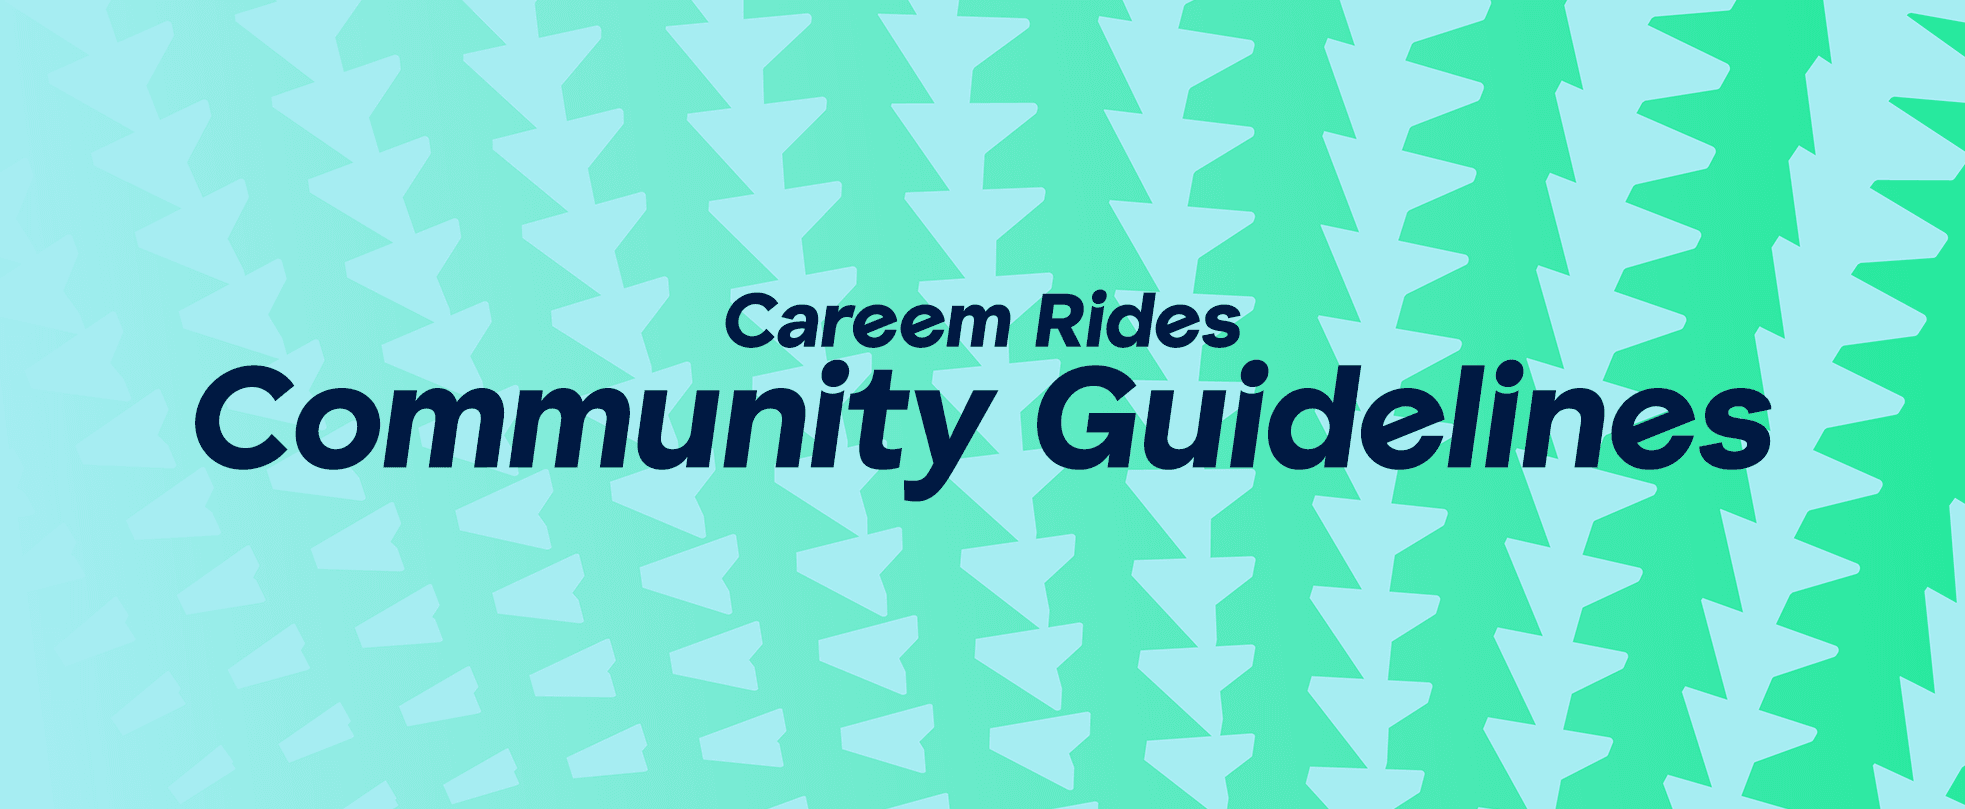 Careem Rides Community Guidelines